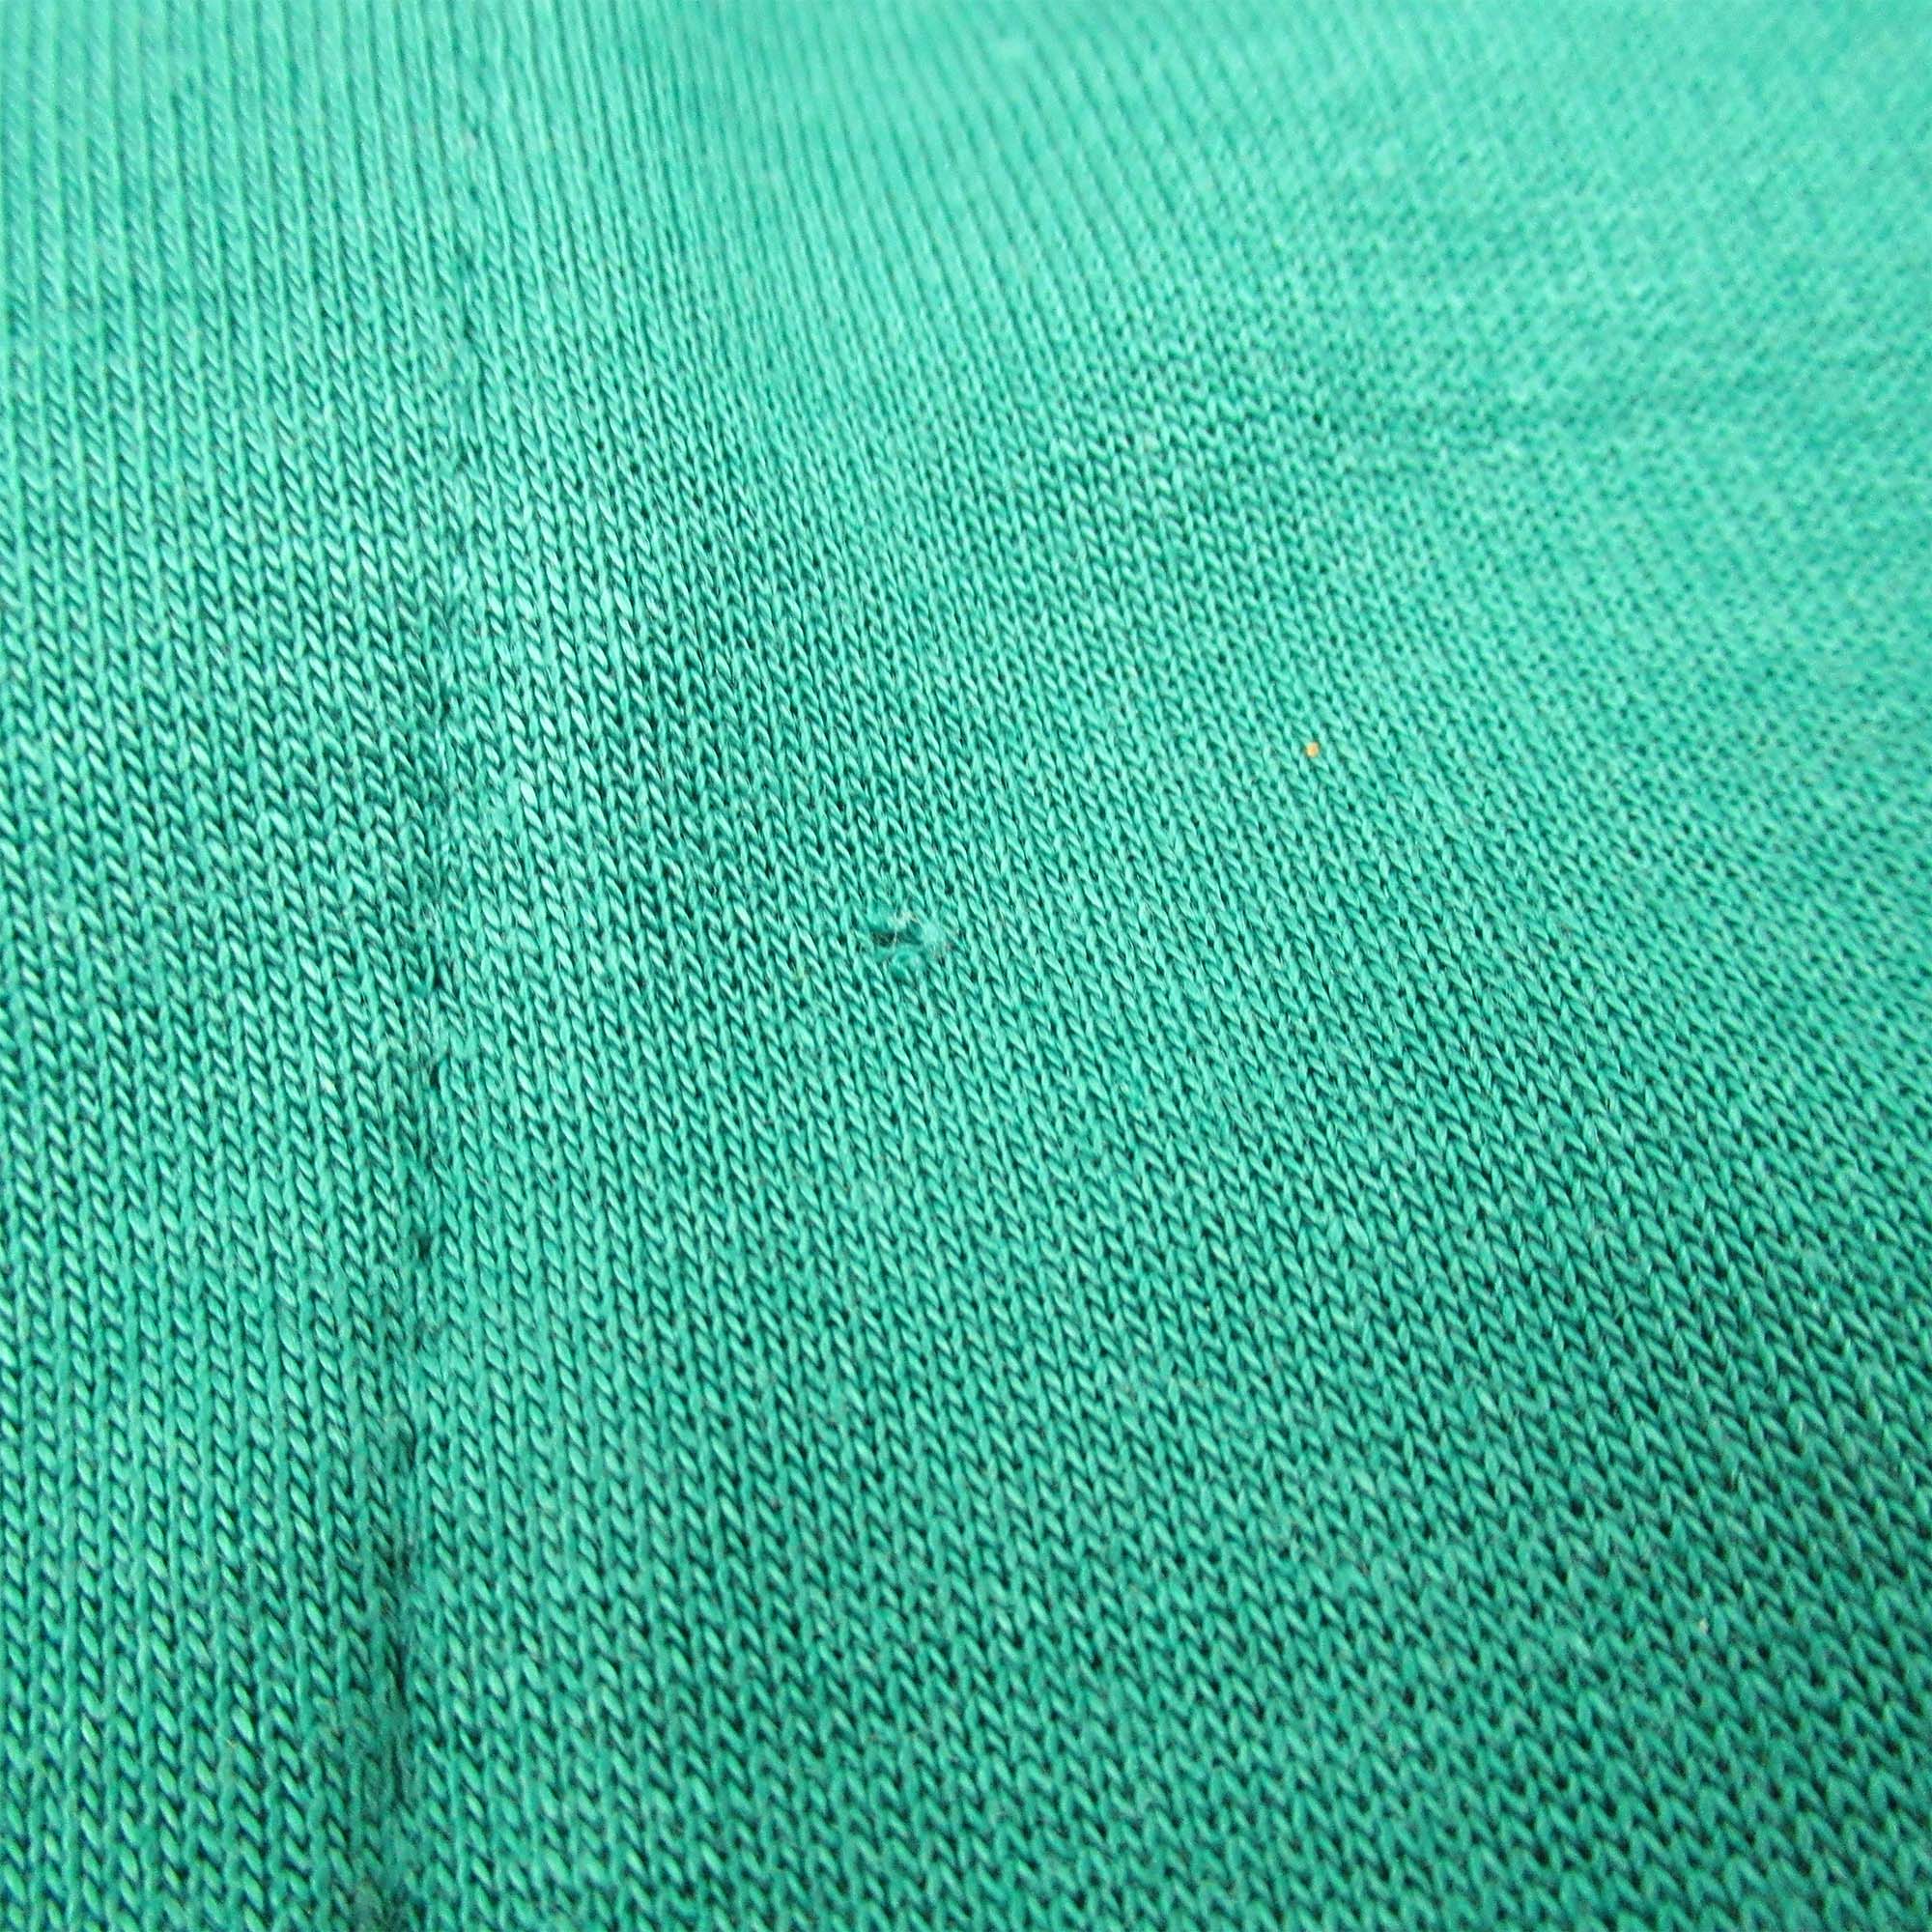 Vintage Sweatshirt Green -  L